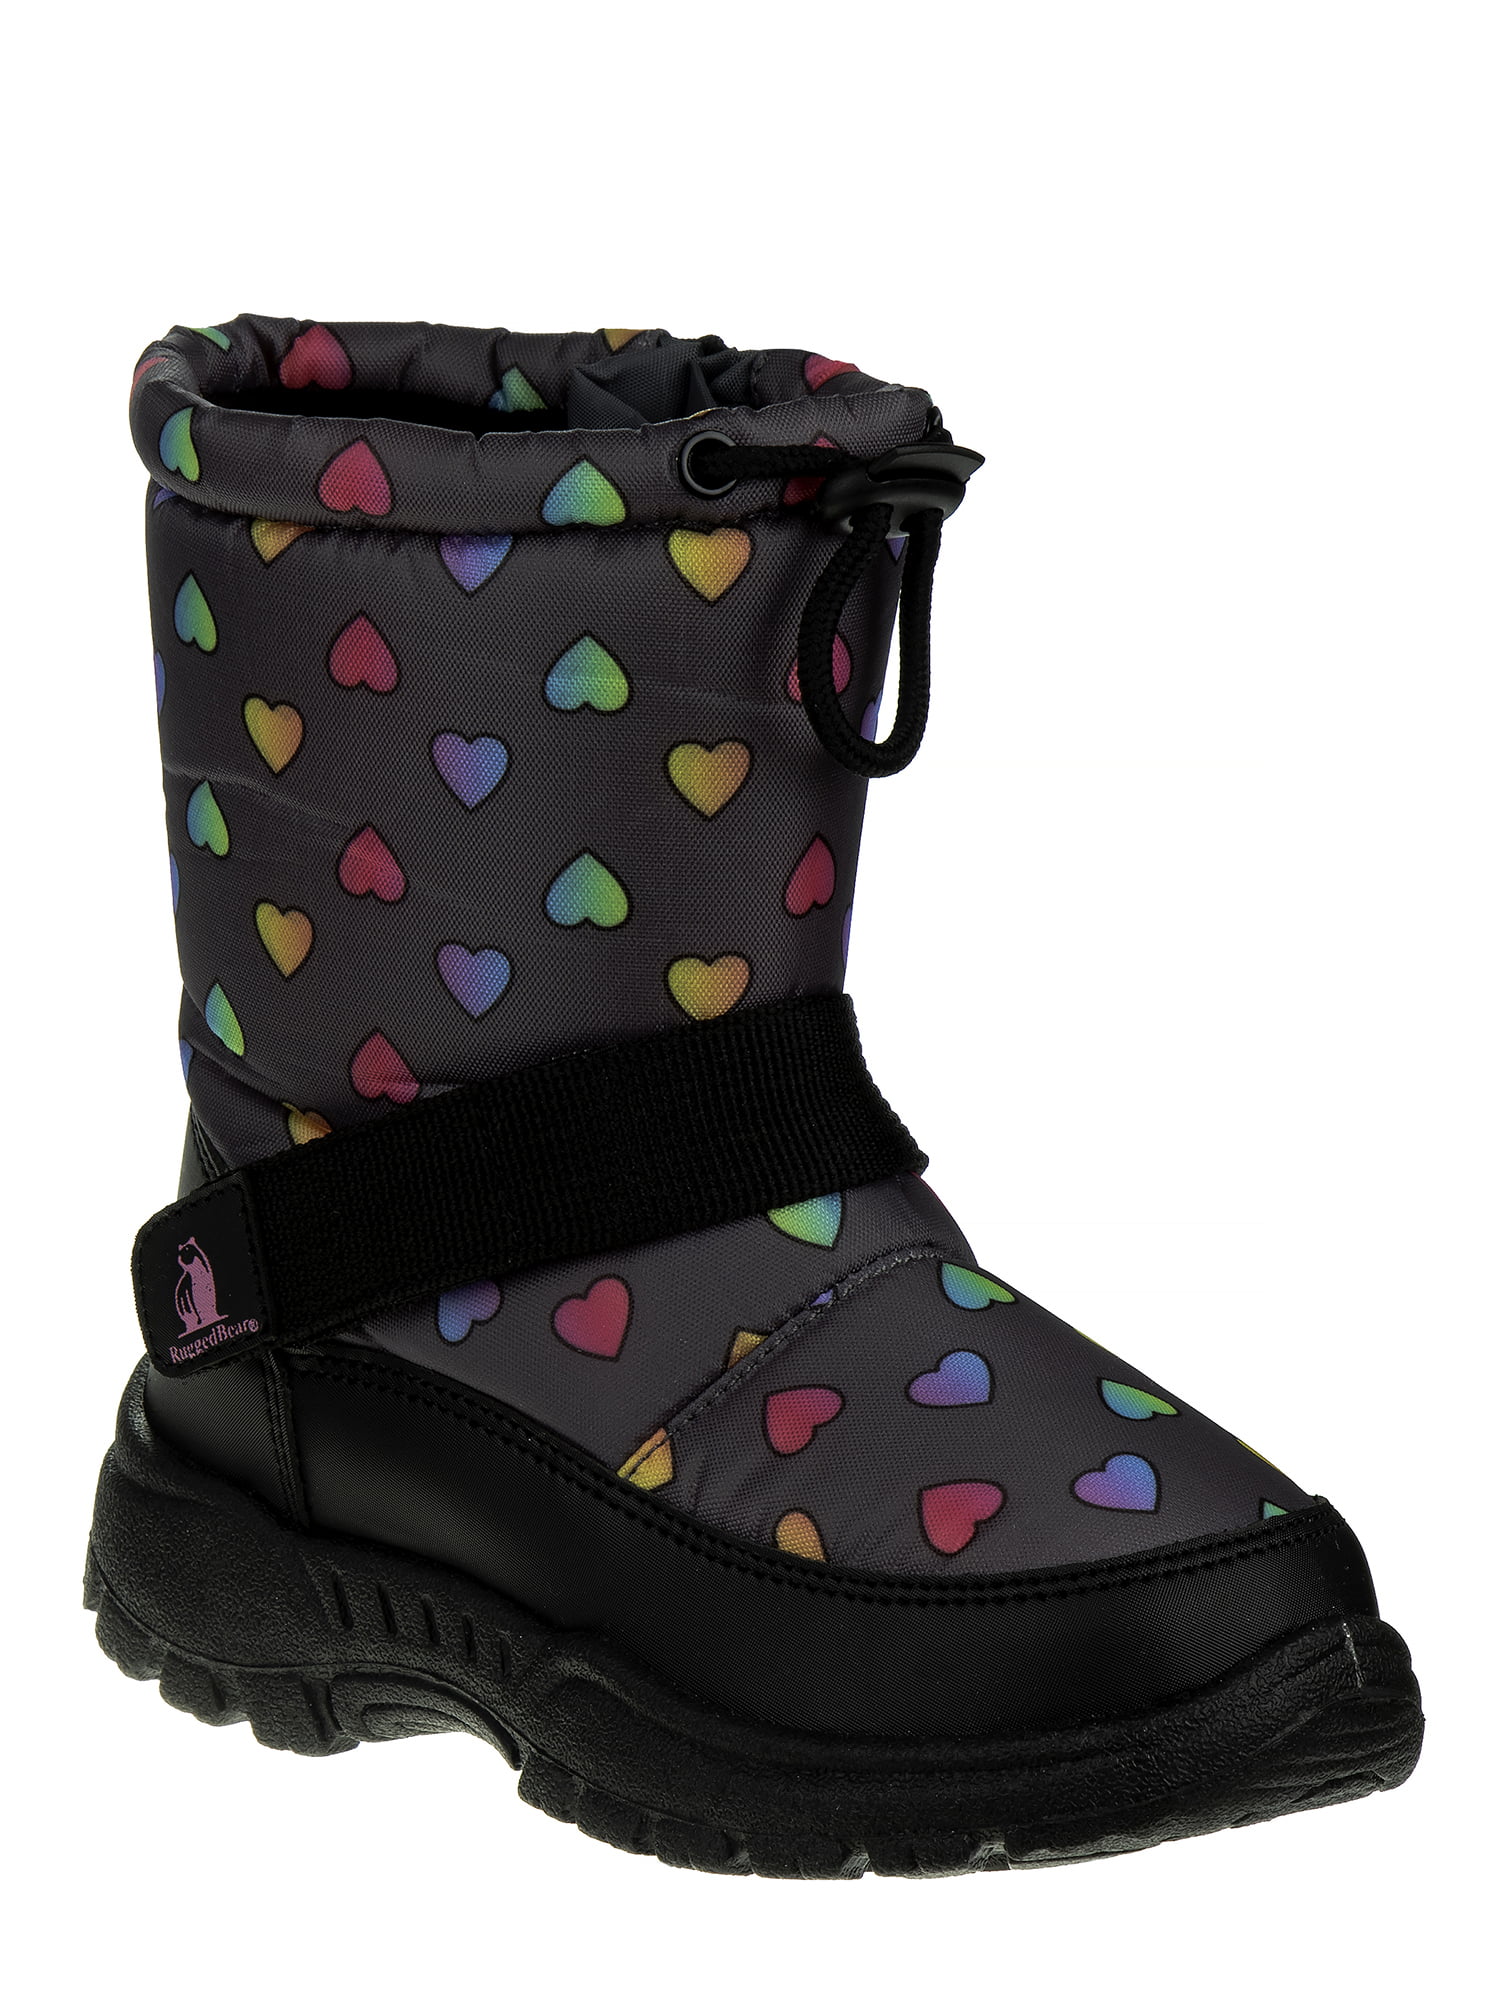 Wonder Nation Boys girls Winter Boots Toddler Size 6 RTL $18.77 color black gree 